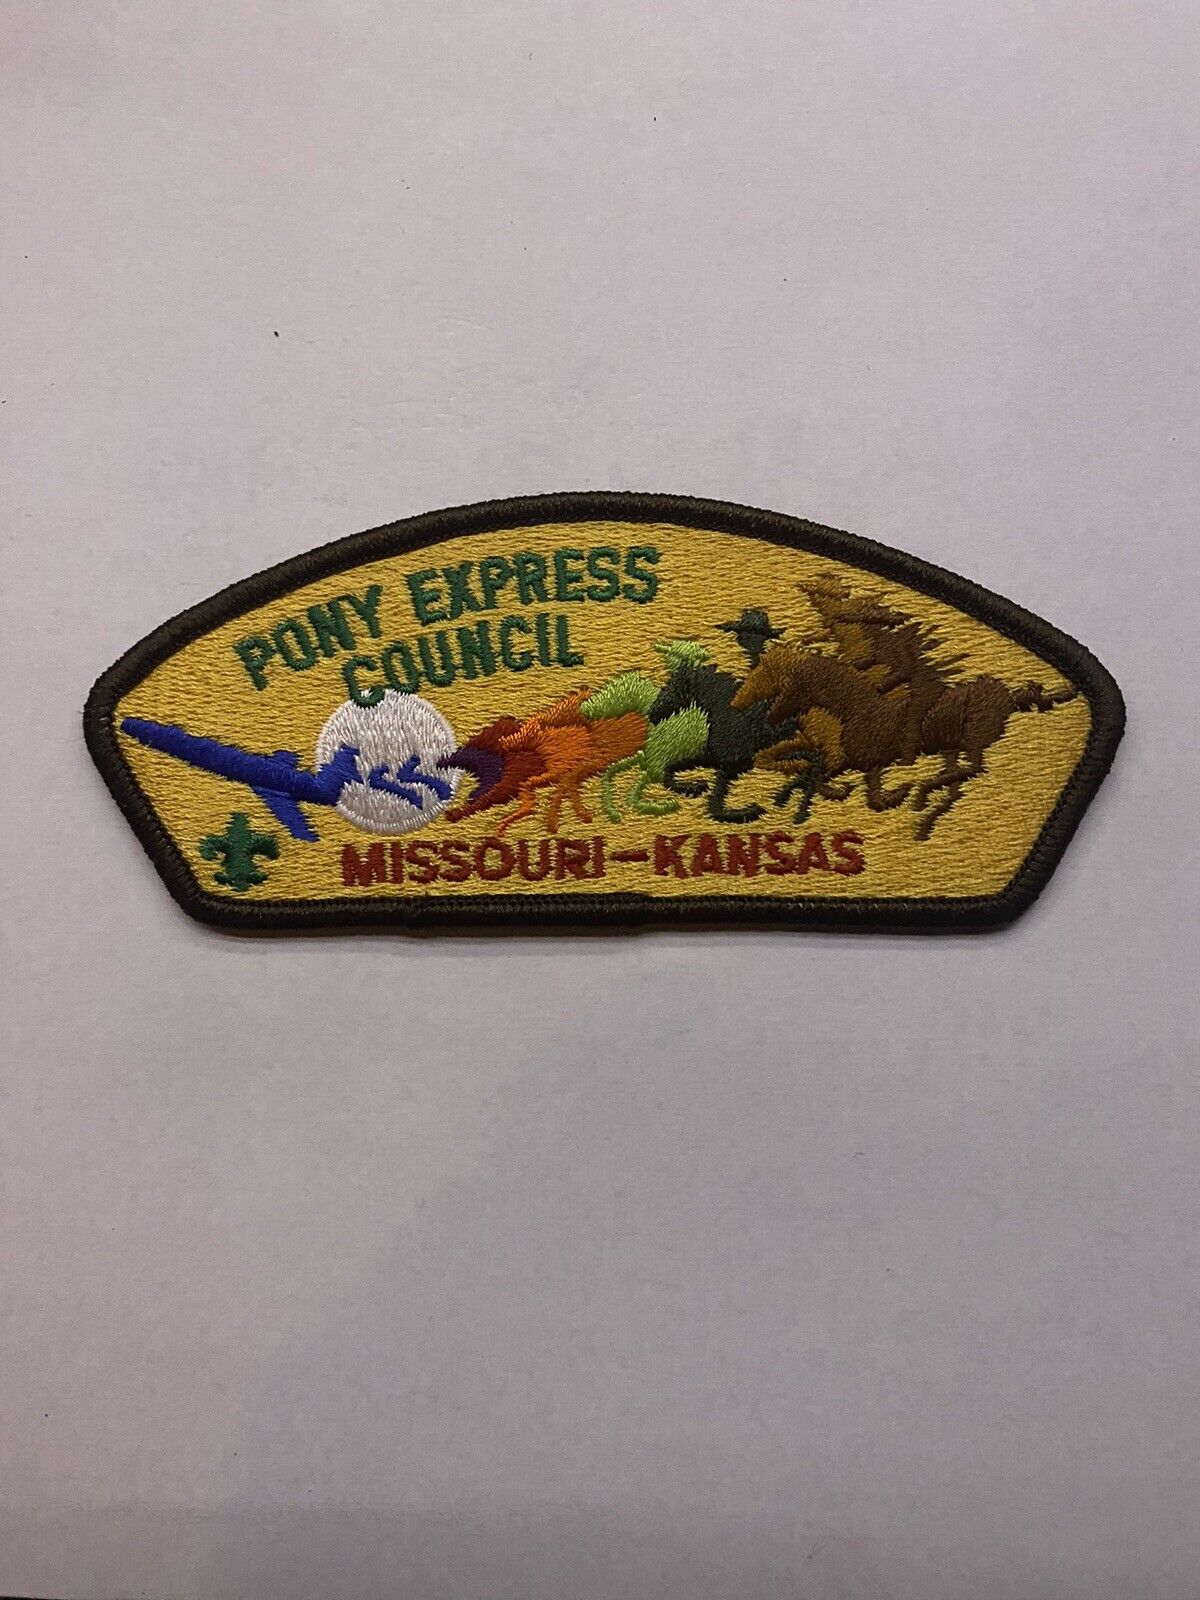 Boy Scout Missouri Kansas Pony Express Council Shoulder Patch